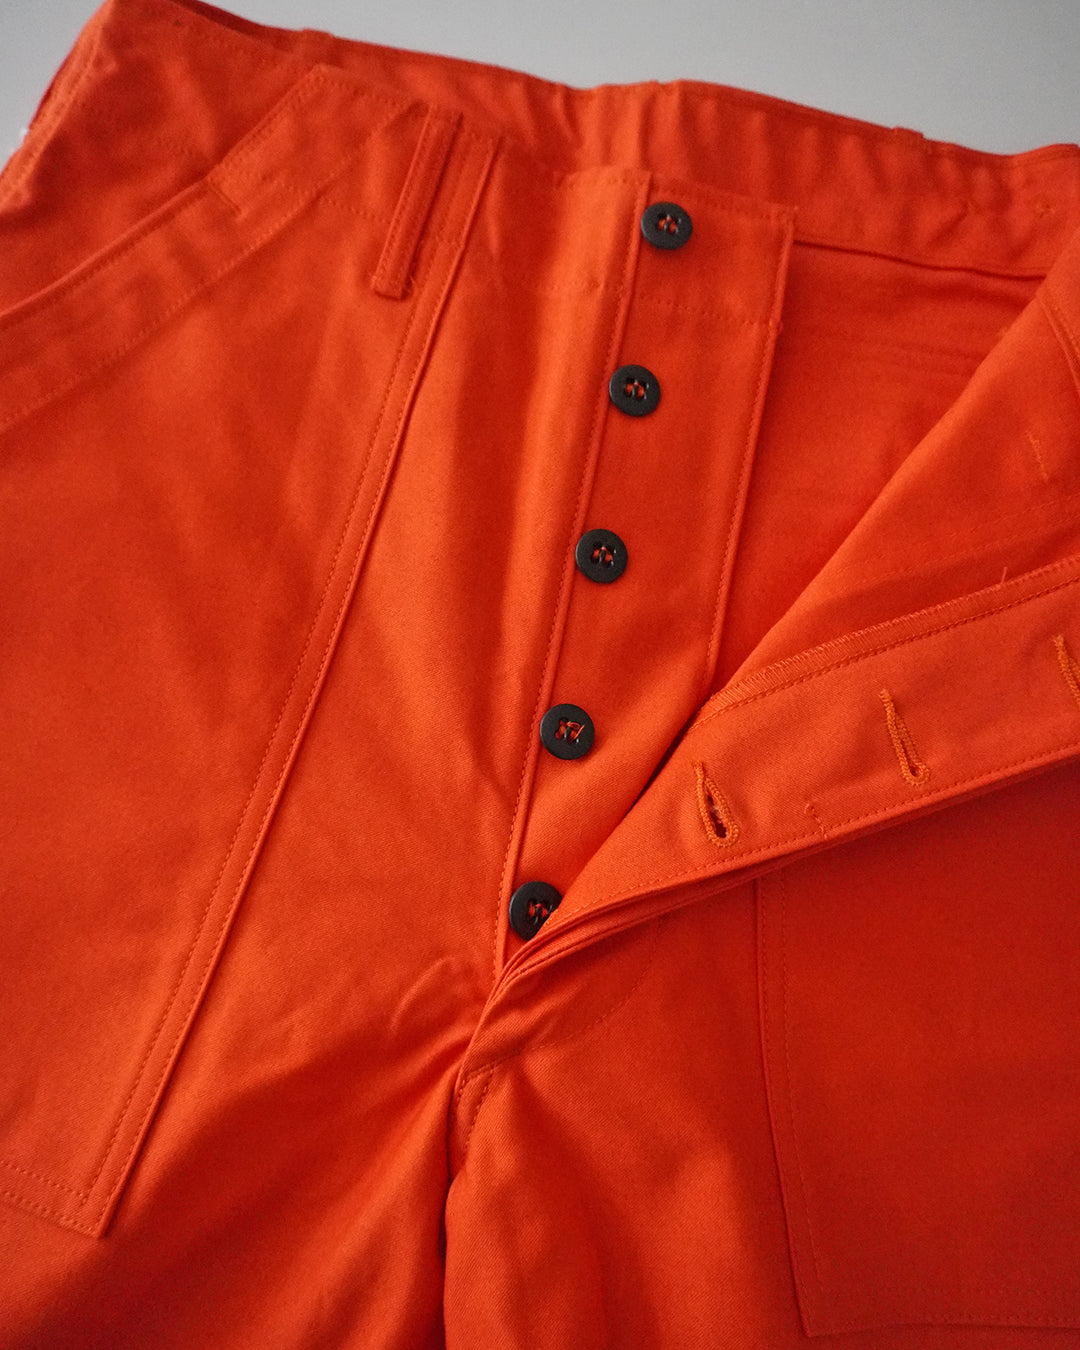 TUKI baker pants / orange / 2 ply sateen / size1,2